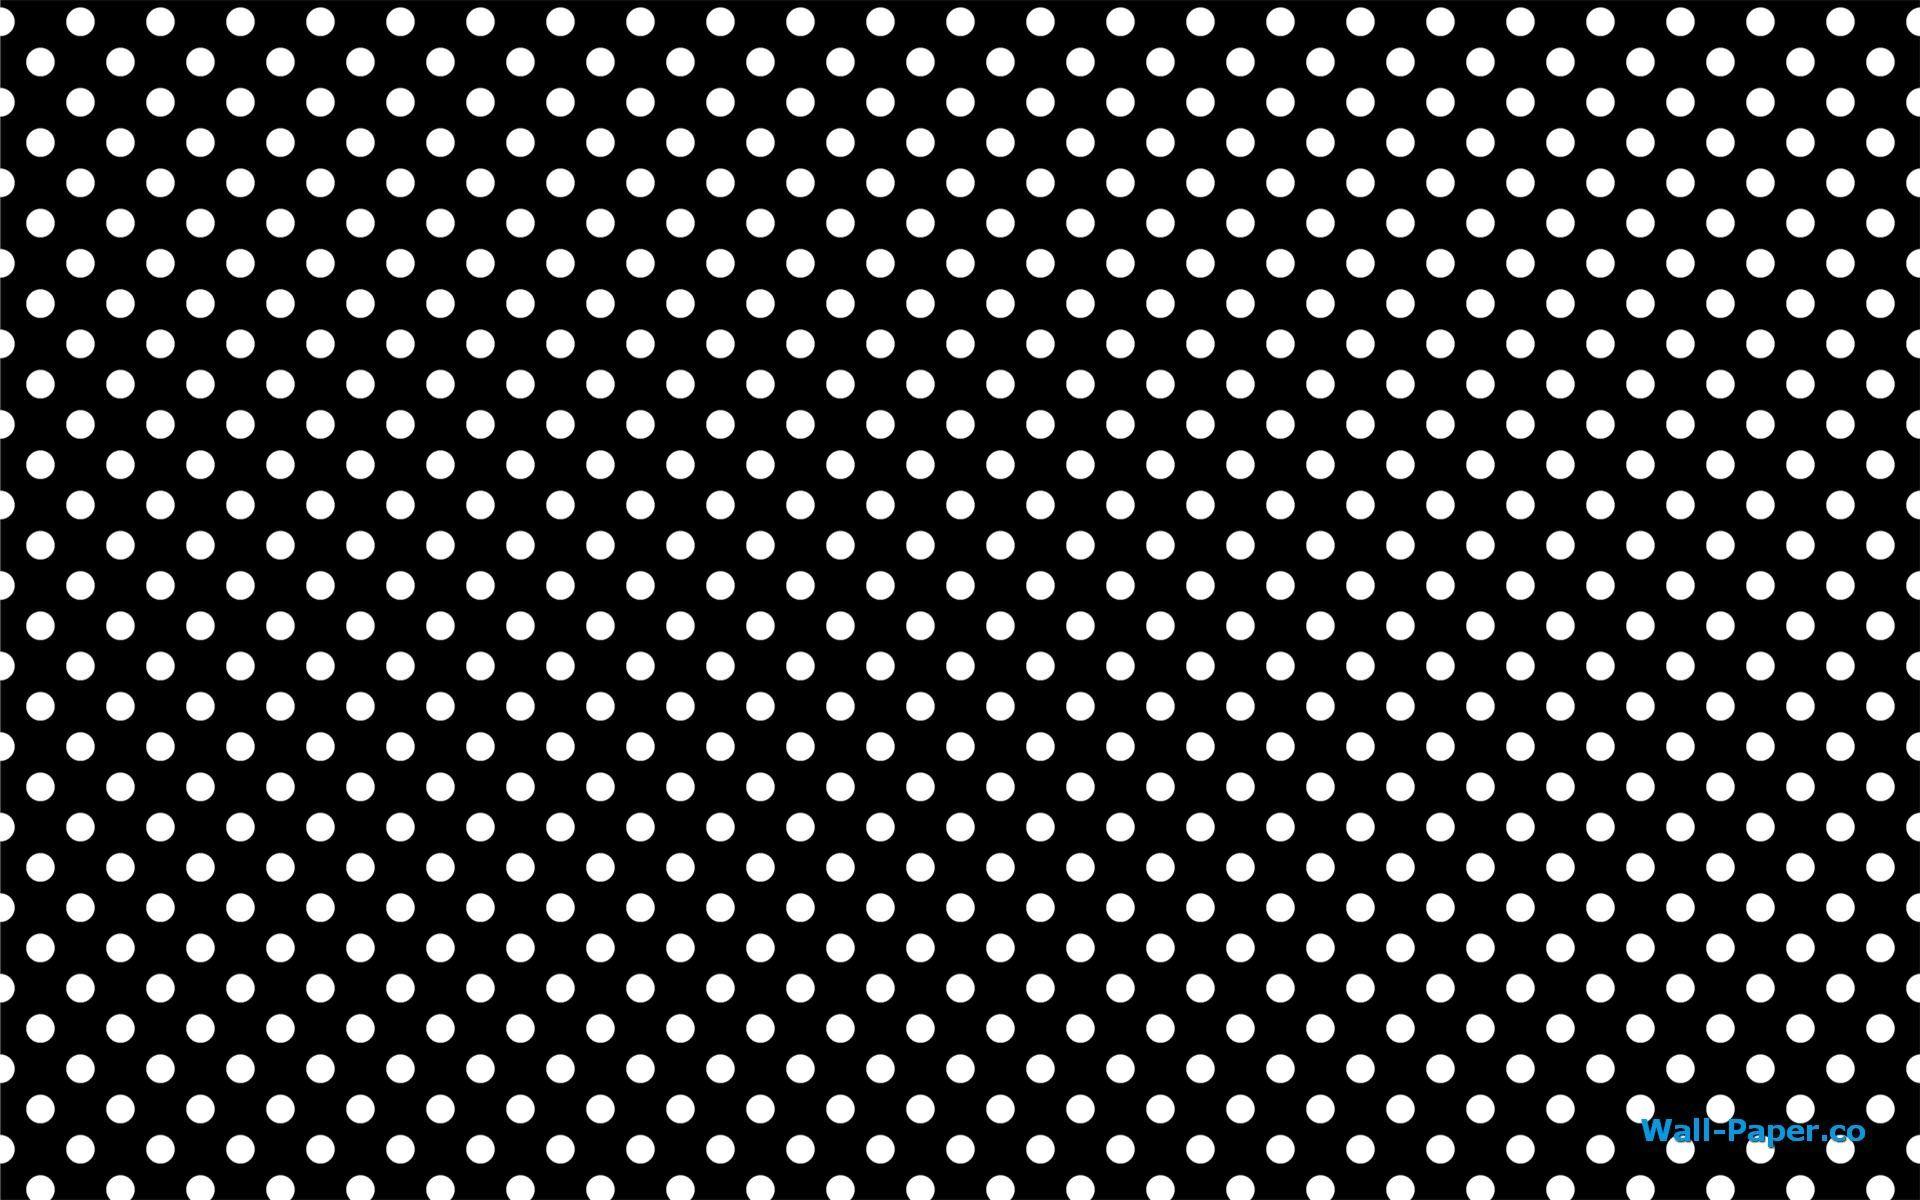 Polka dot wallpaper Red black and gray dots  Stock Illustration  90385541  PIXTA